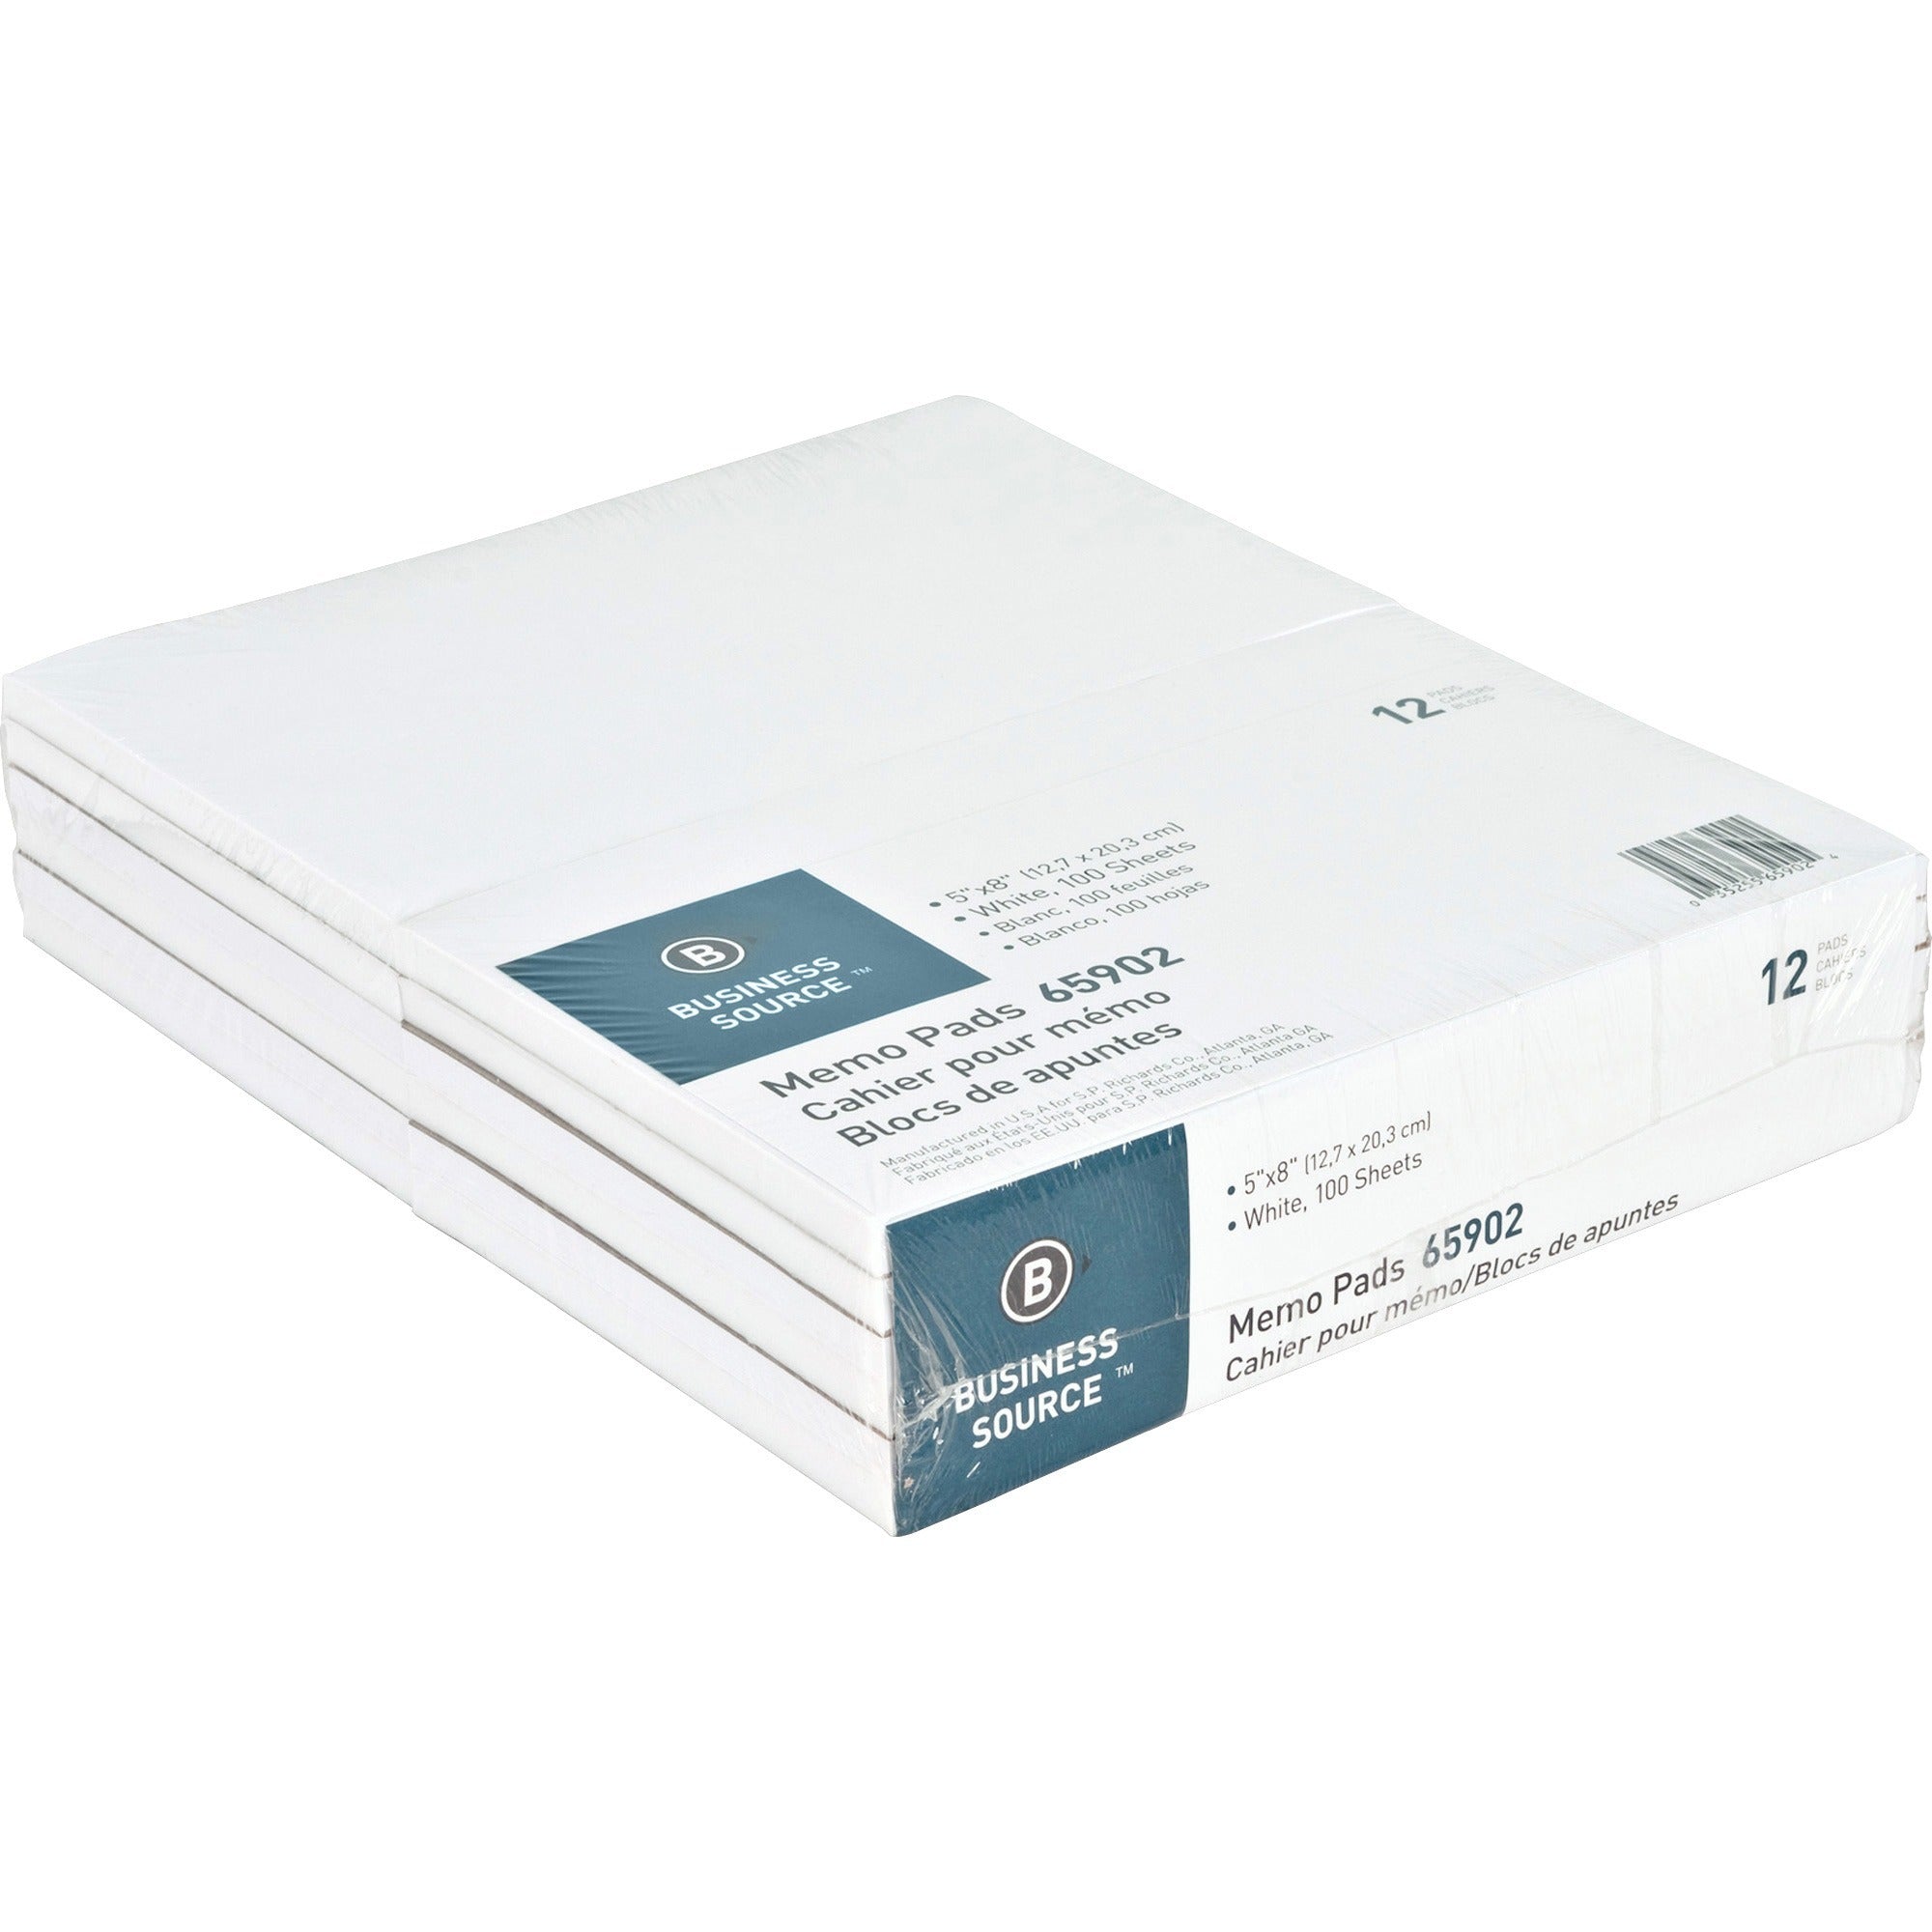 Business Source Plain Memo Pads - 100 Sheets - Plain - Glue - 16 lb Basis Weight - 5" x 8" - White Paper - 12 / Dozen - 